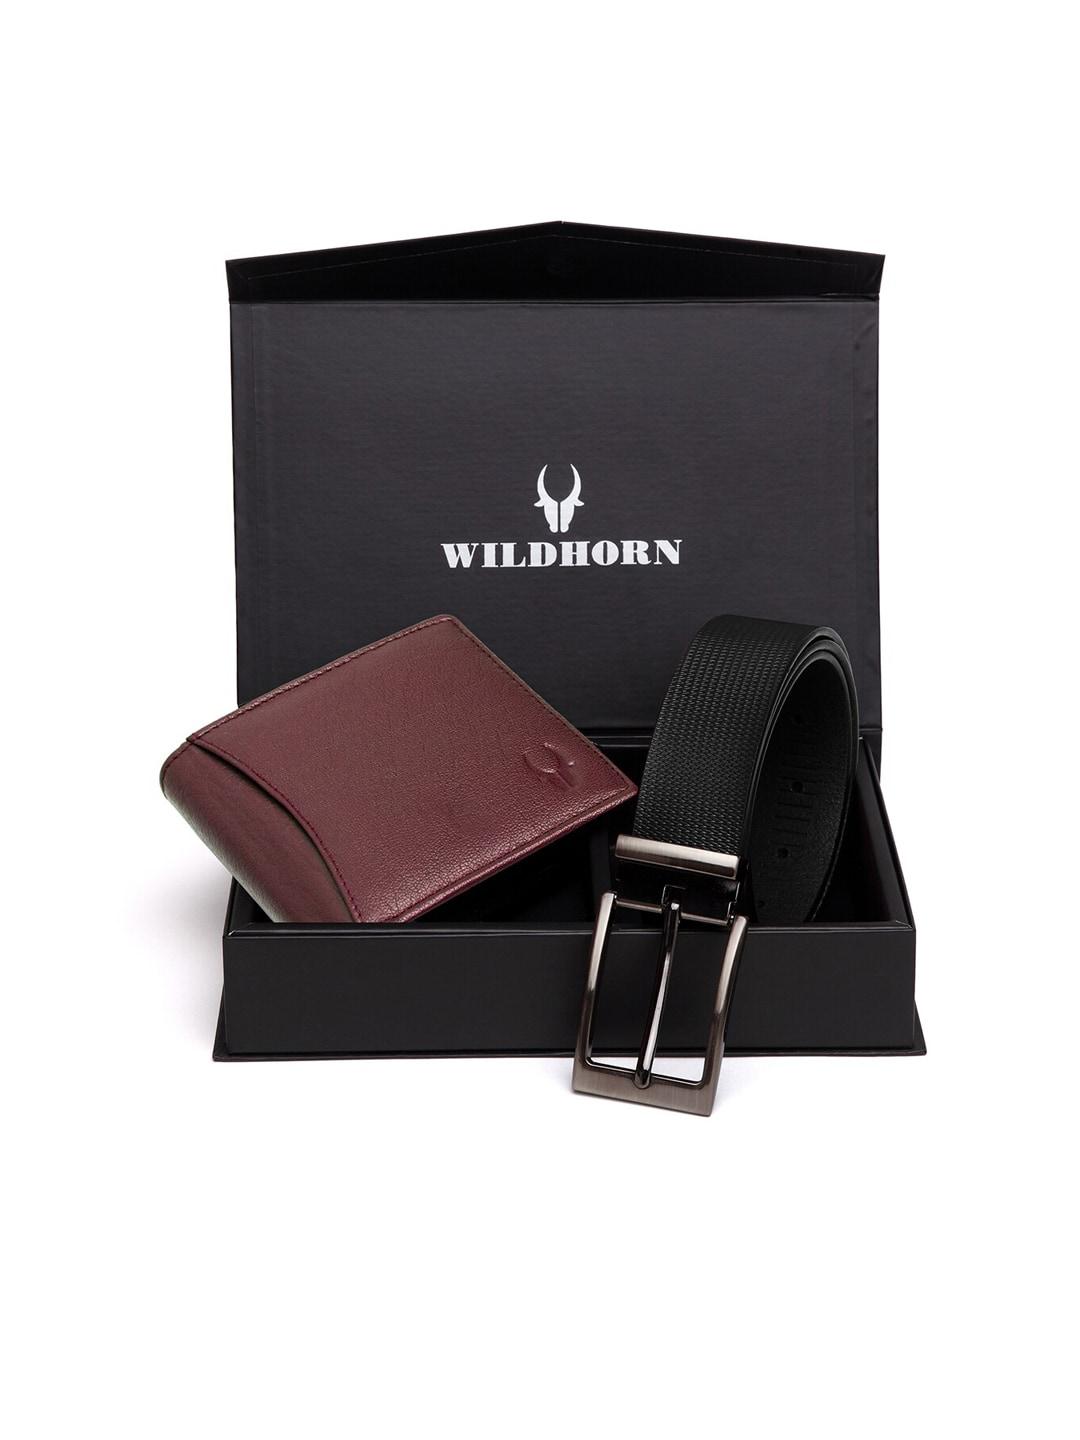 wildhorn men brown & black rfid protected genuine leather accessory gift set